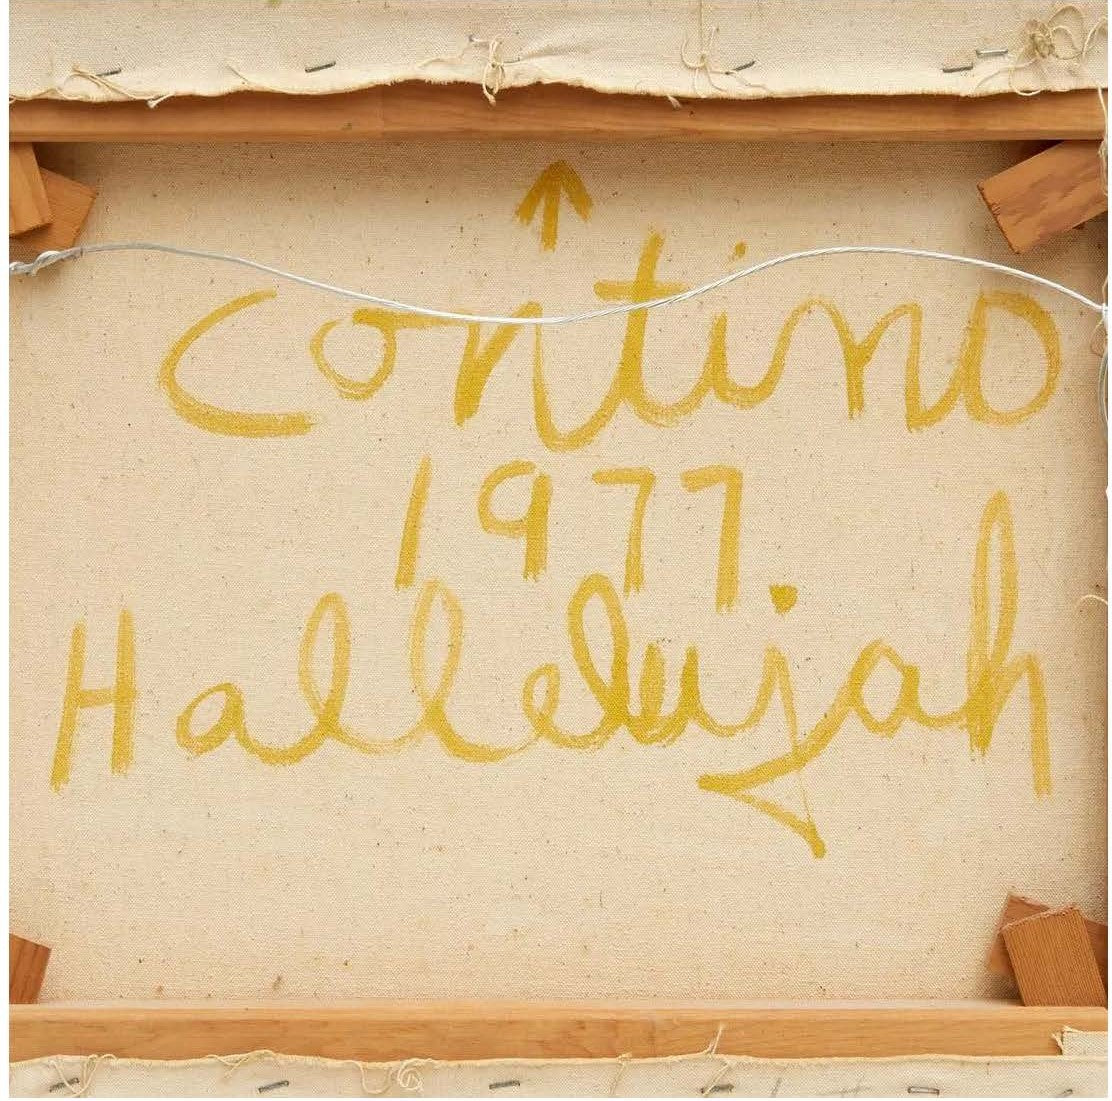 Leonard T. Contino- Hallelujah, 1977